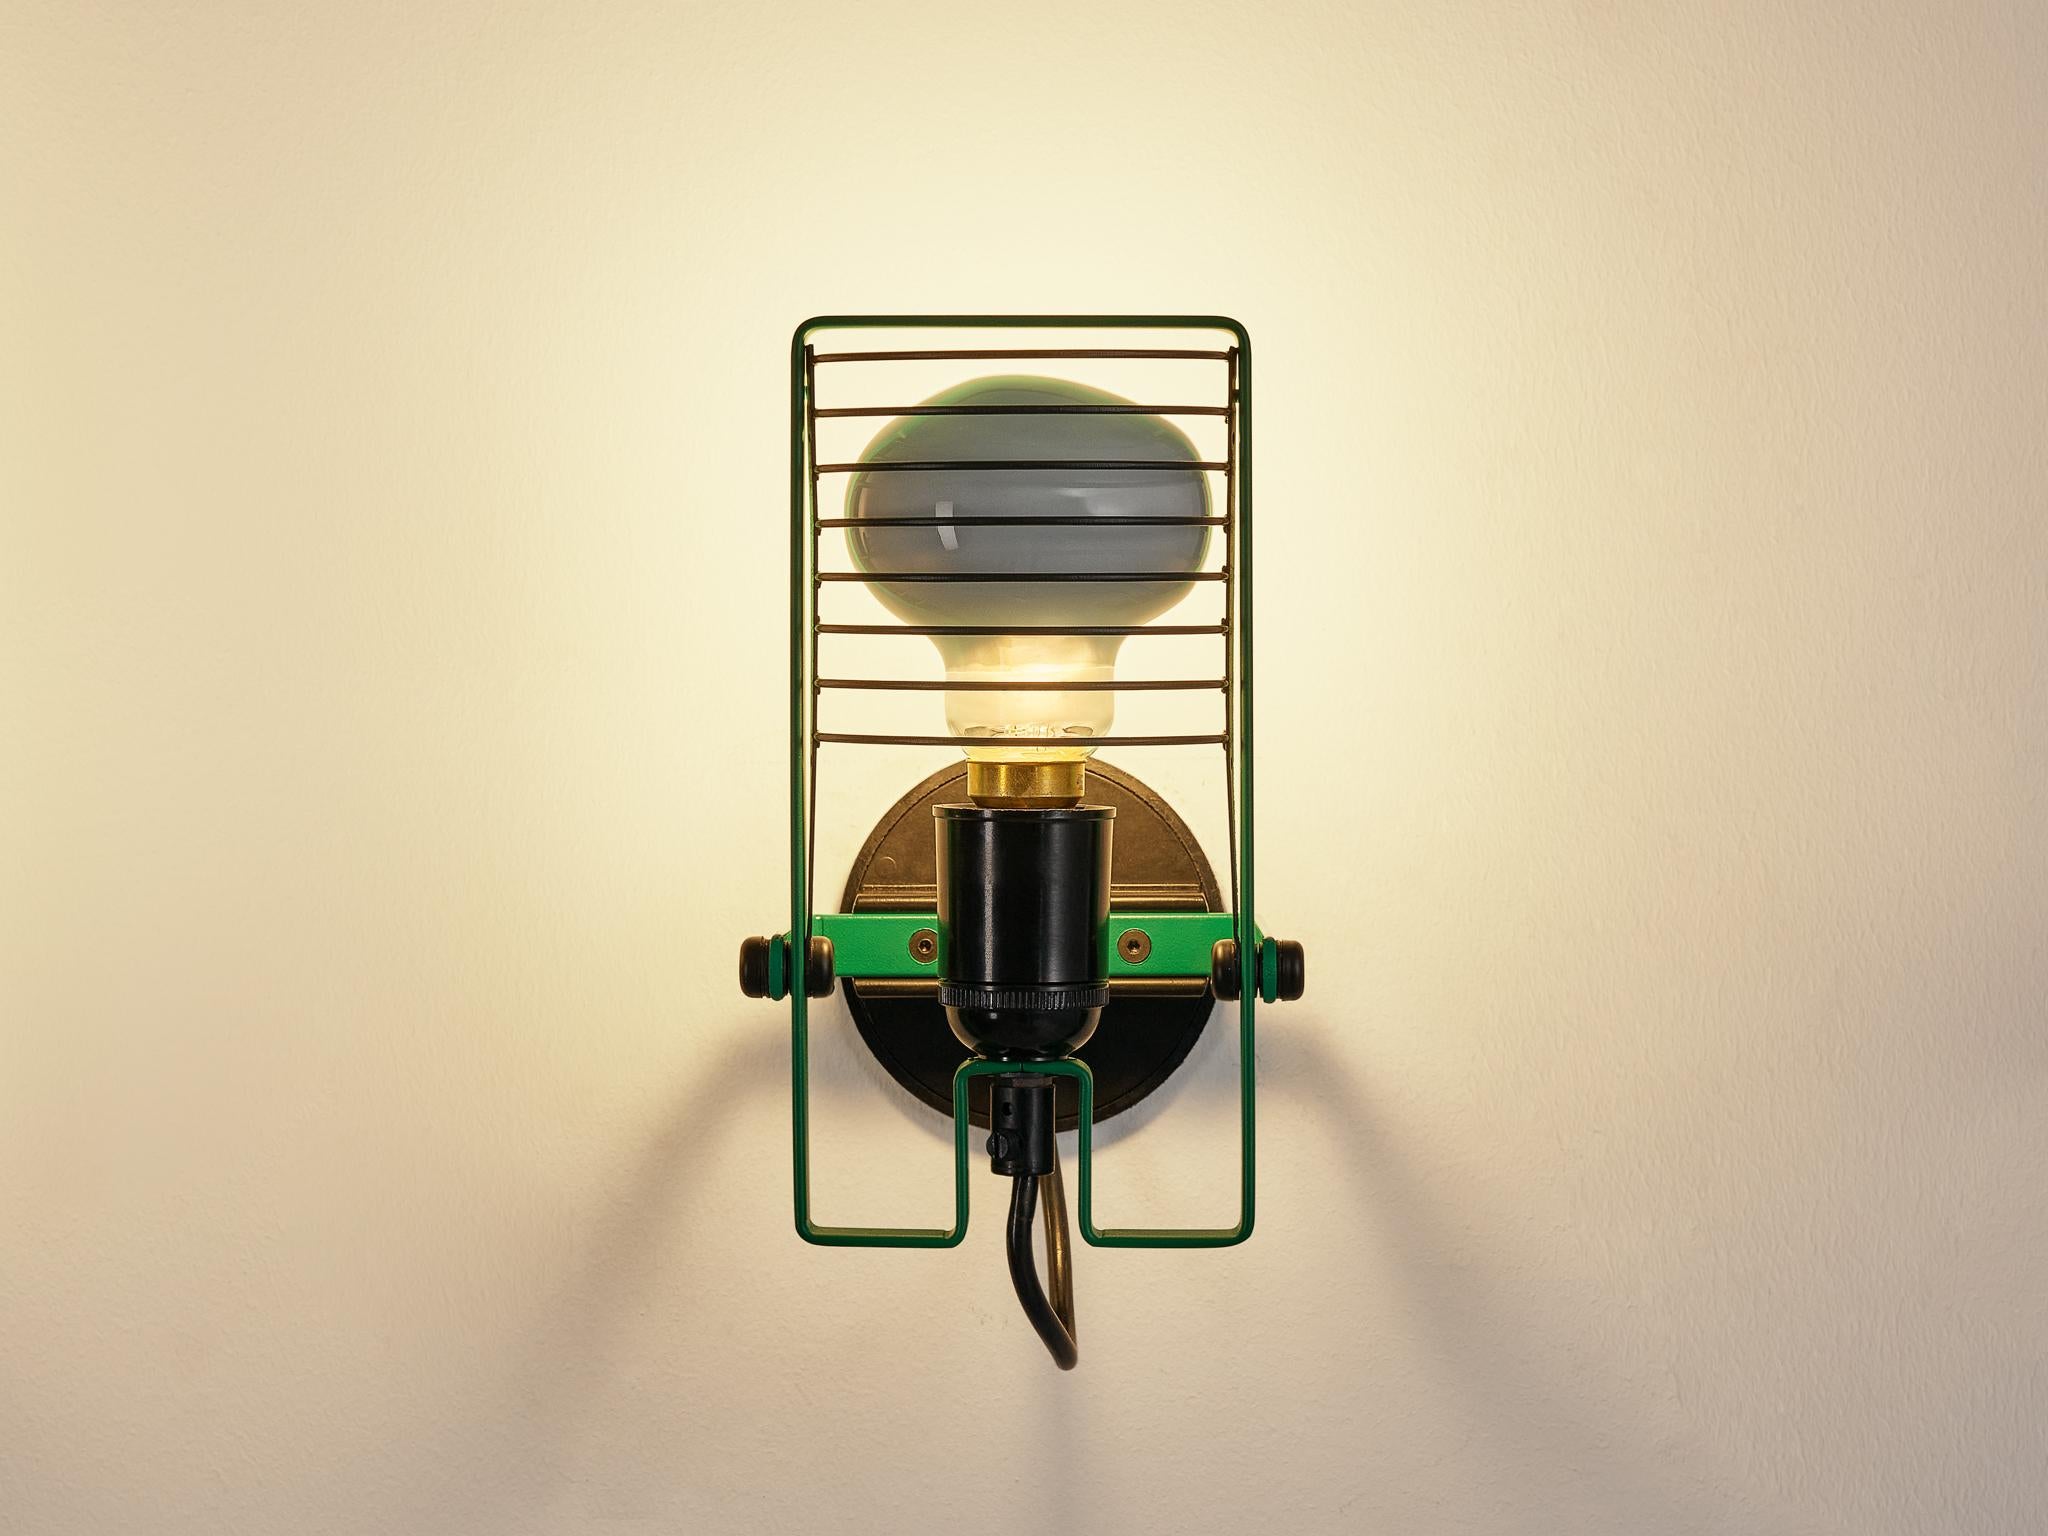 Aluminum Ernesto Gismondi for Artemide 'Sintesi Faretto' Wall Lights in Green